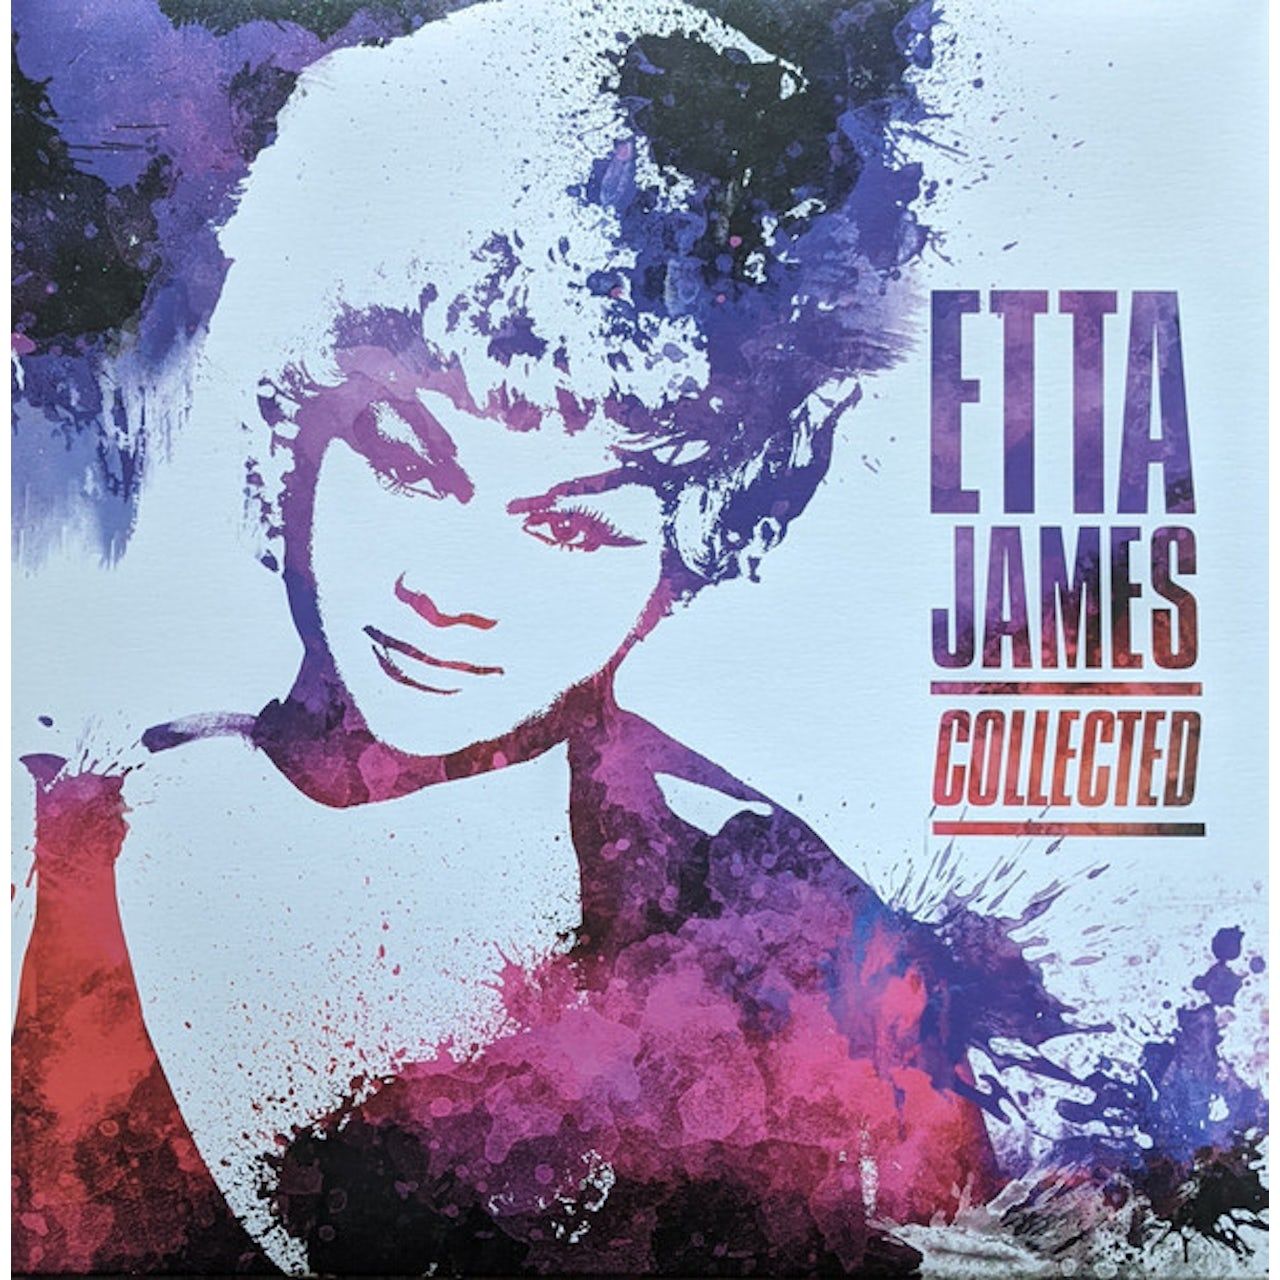 8719262017184, Виниловая пластинка James, Etta, Collected виниловая пластинка etta james – collected 2lp